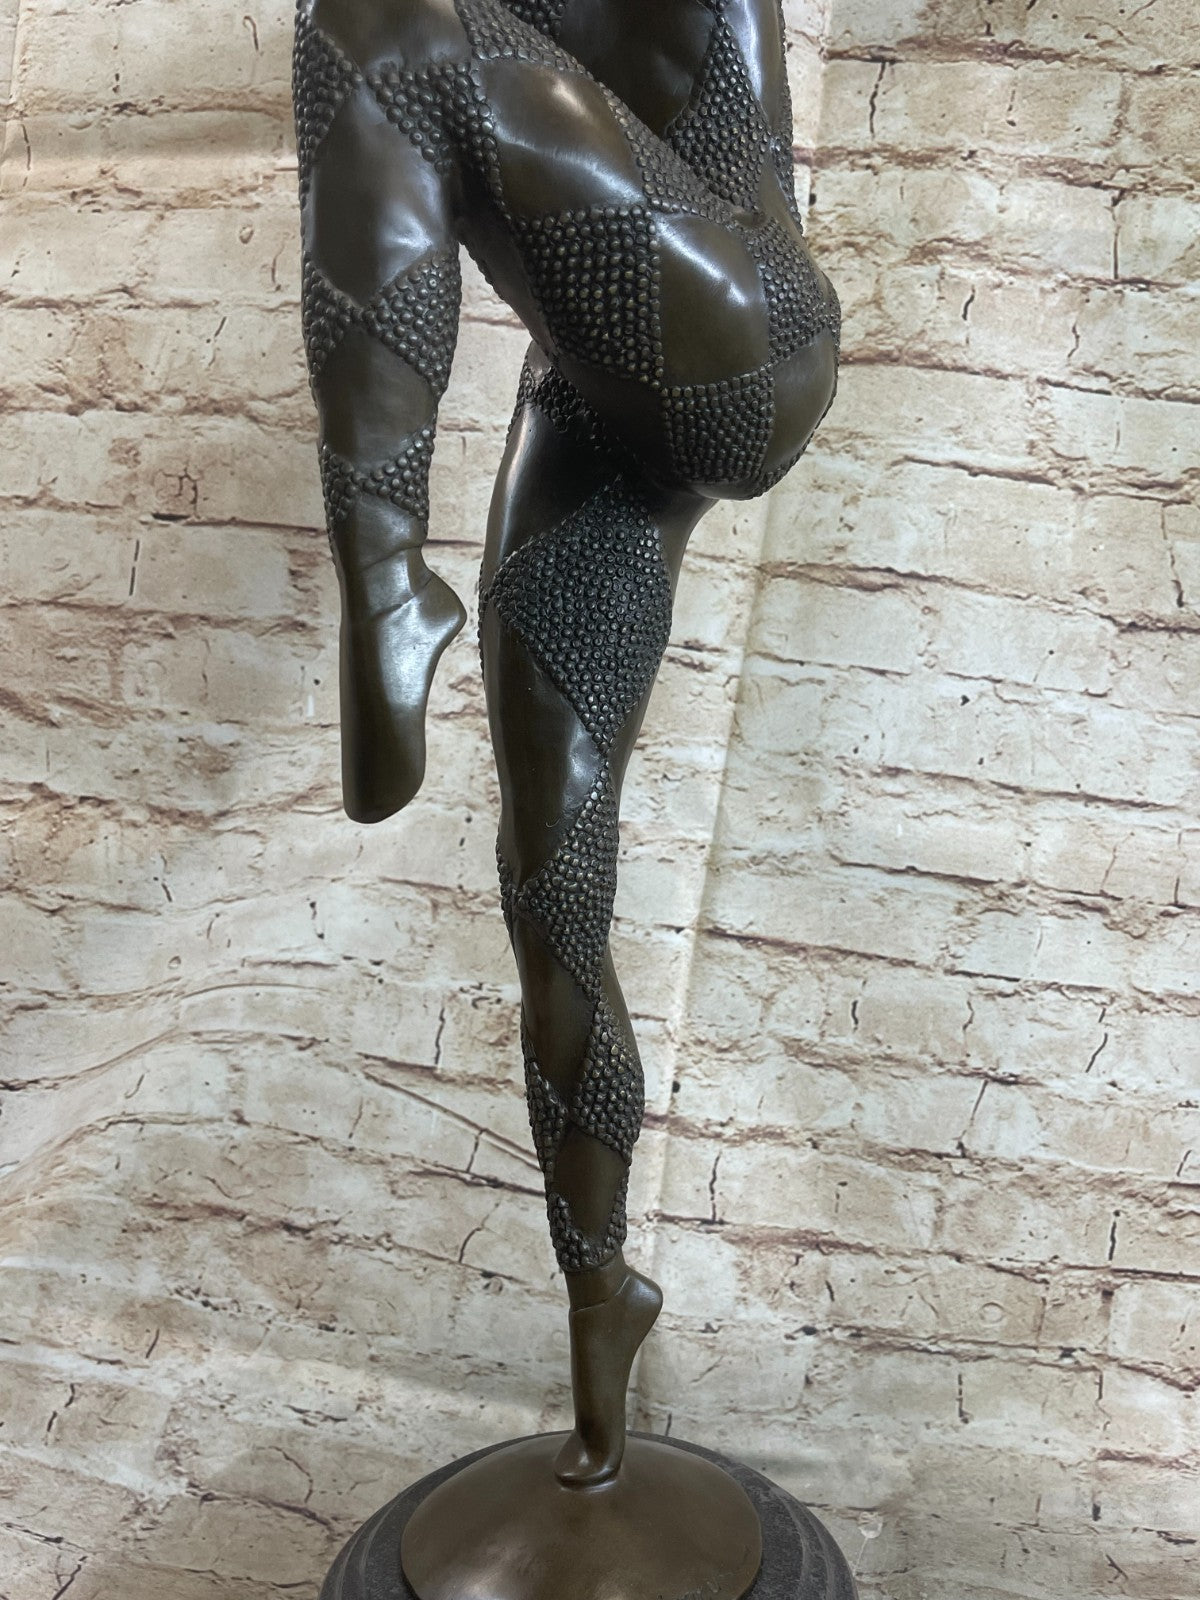 Vintage Signed Exotic Dancer Chiparus Bronze Sculpture Statue Figurine Decor NR